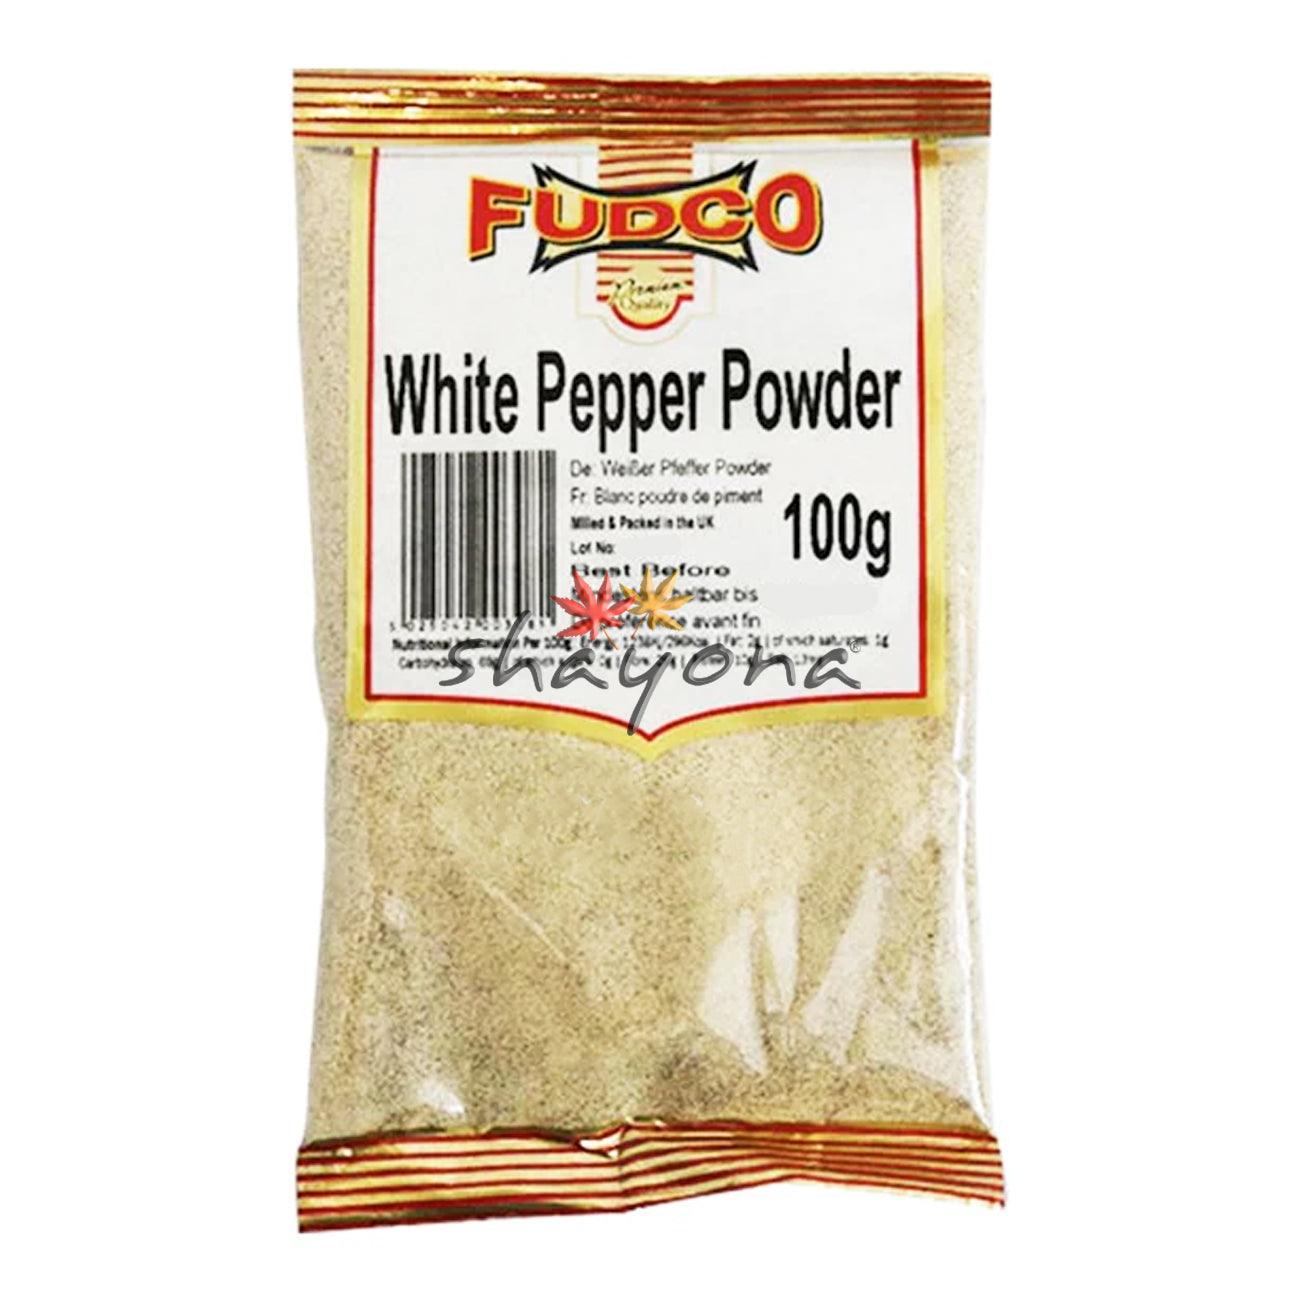 Fudco White Pepper Powder - Shayona UK